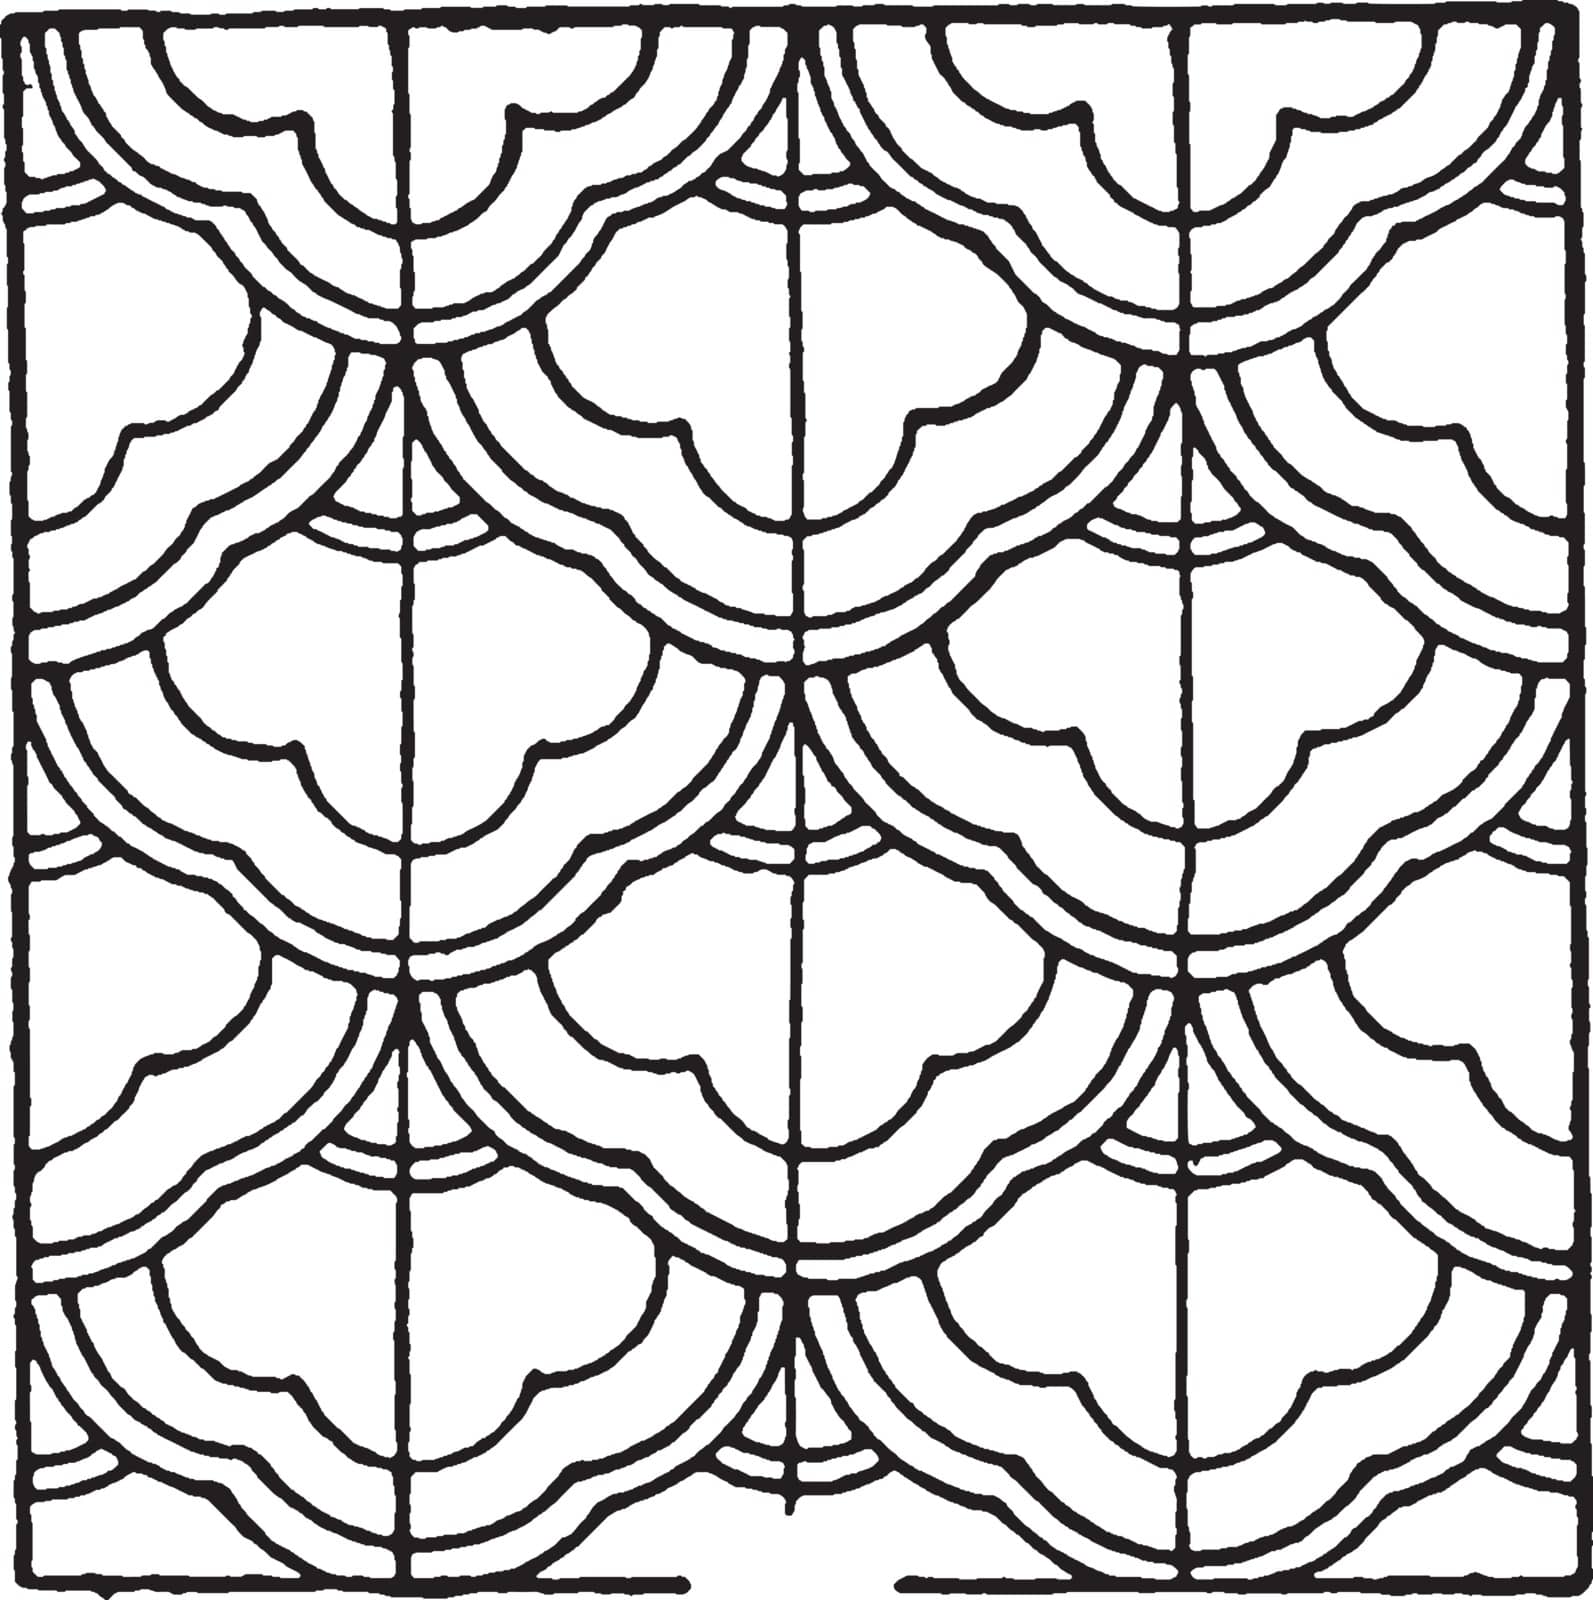 Chinese Enamel Pattern is a design that uses metal fillets, vintage line drawing or engraving illustration.